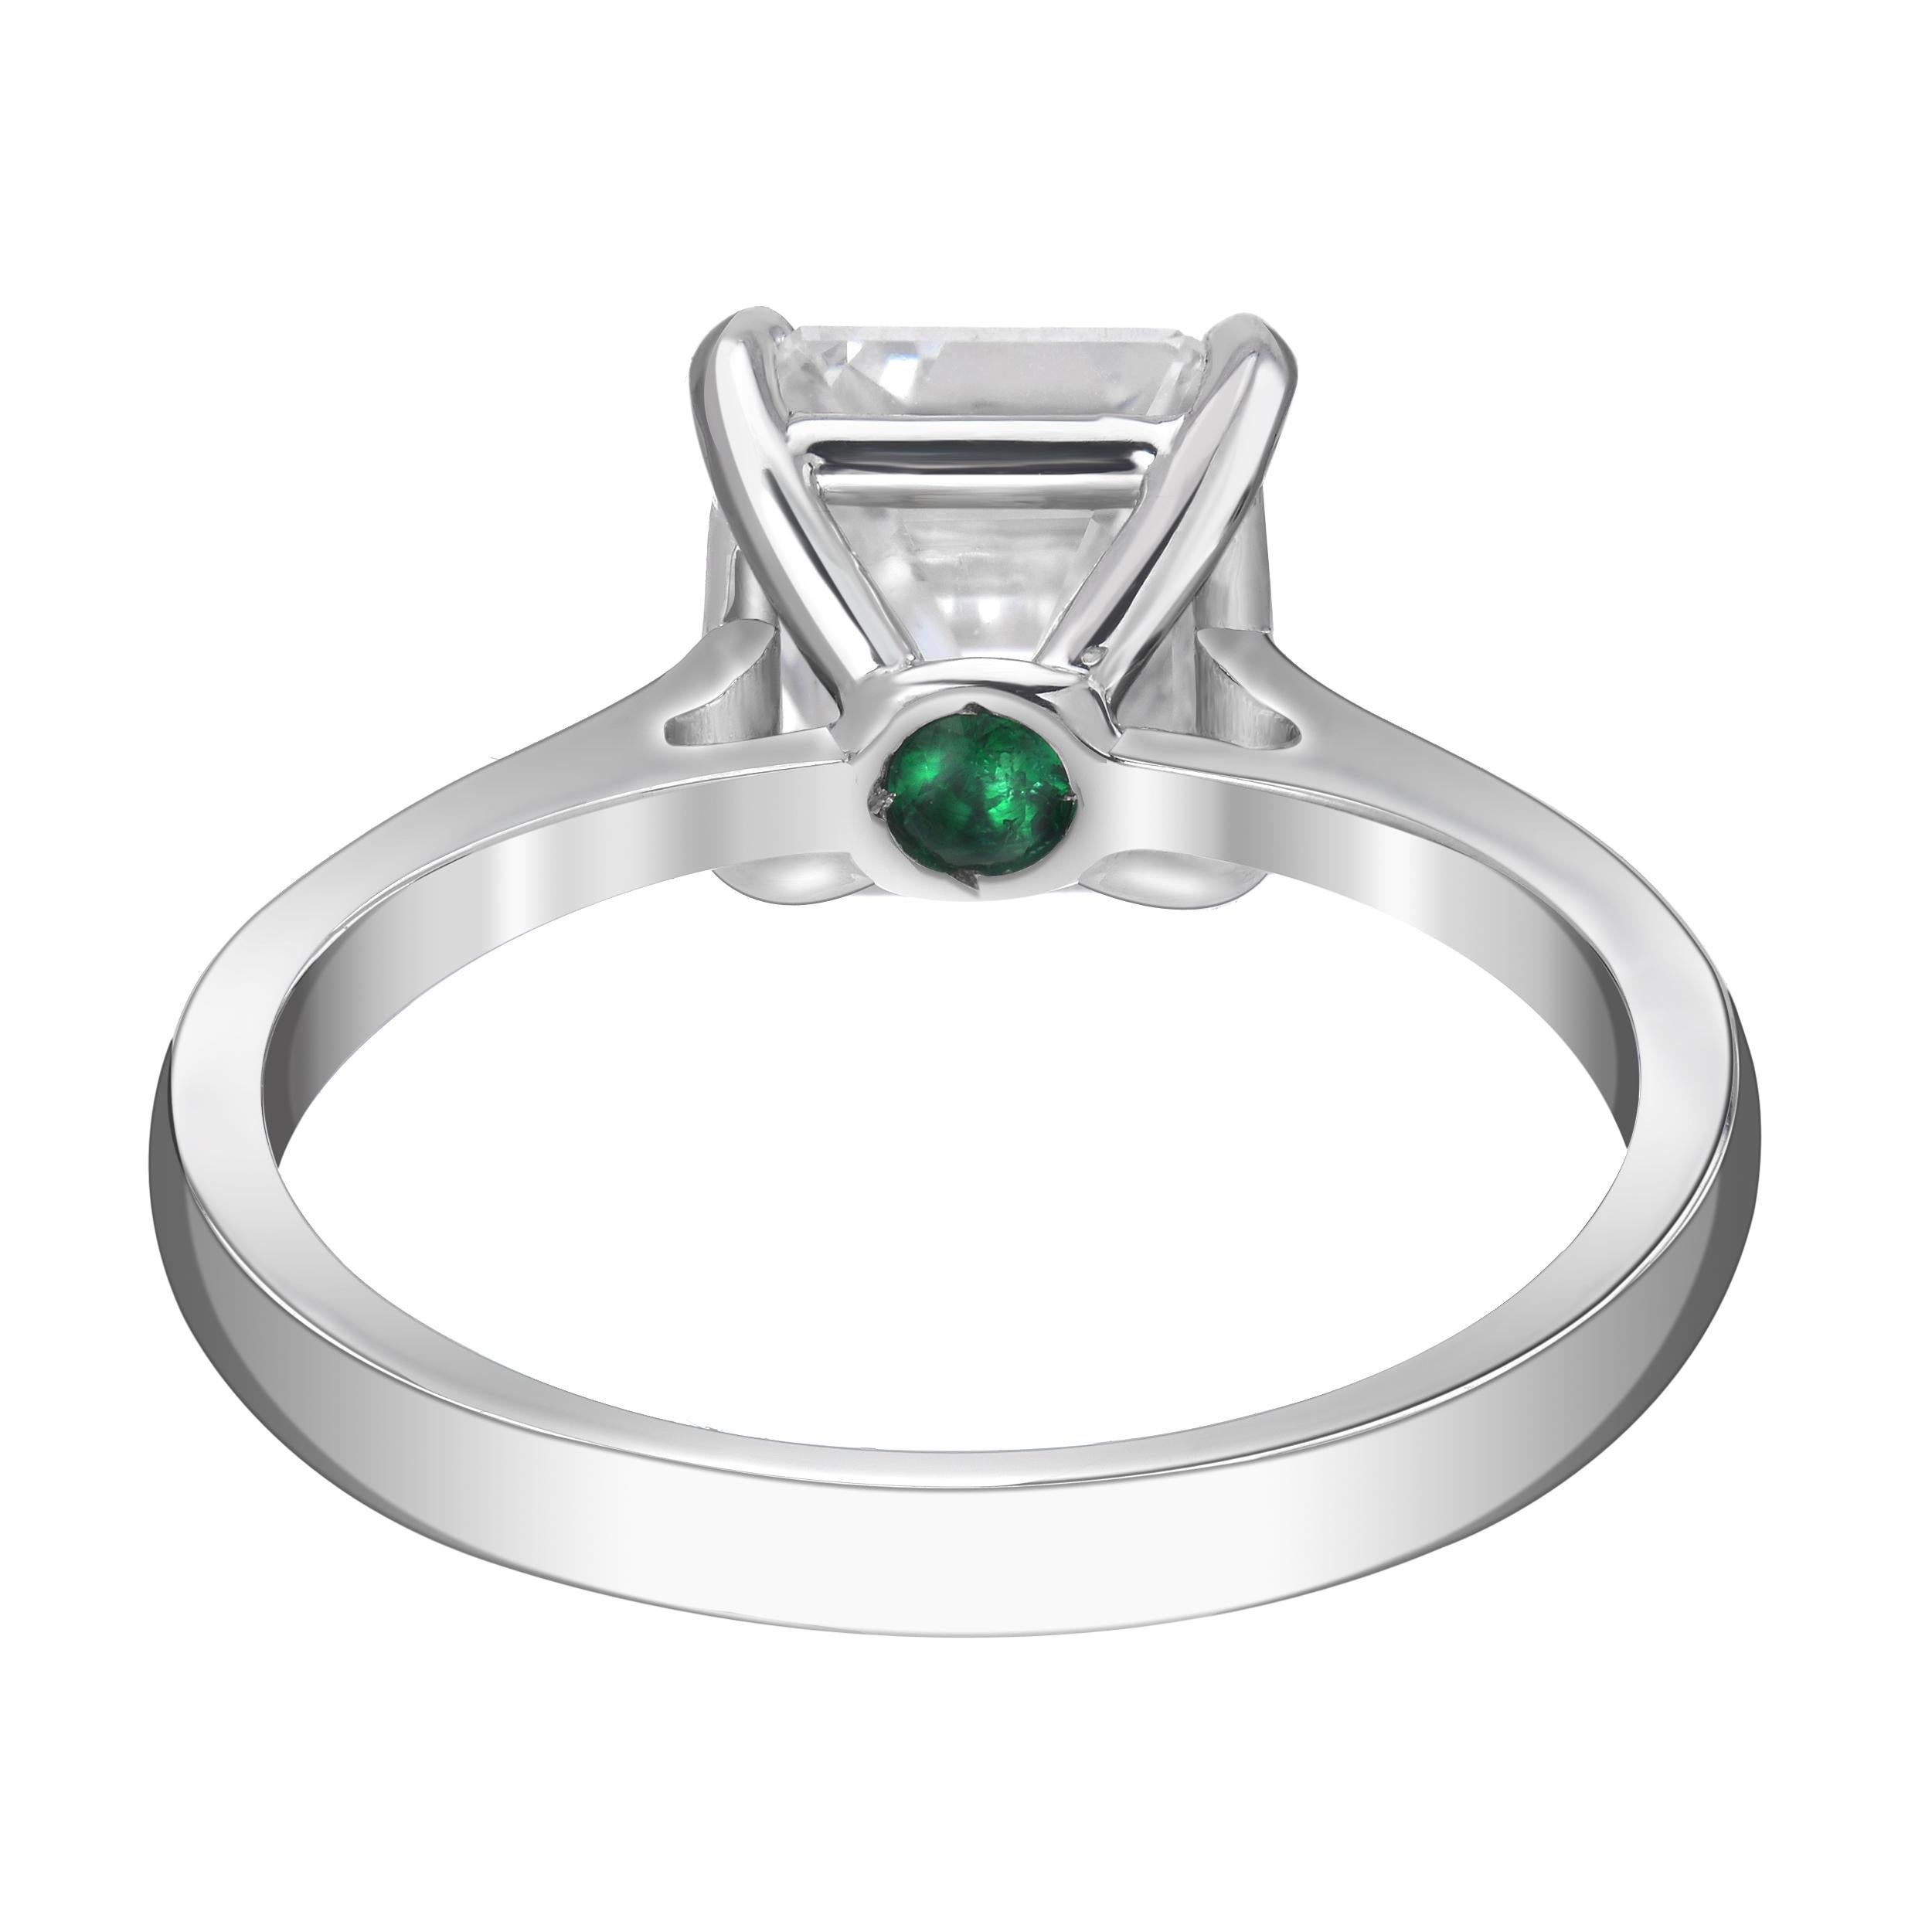 2 carat asscher cut diamond solitaire ring set in platinum with an emerald accent underneath